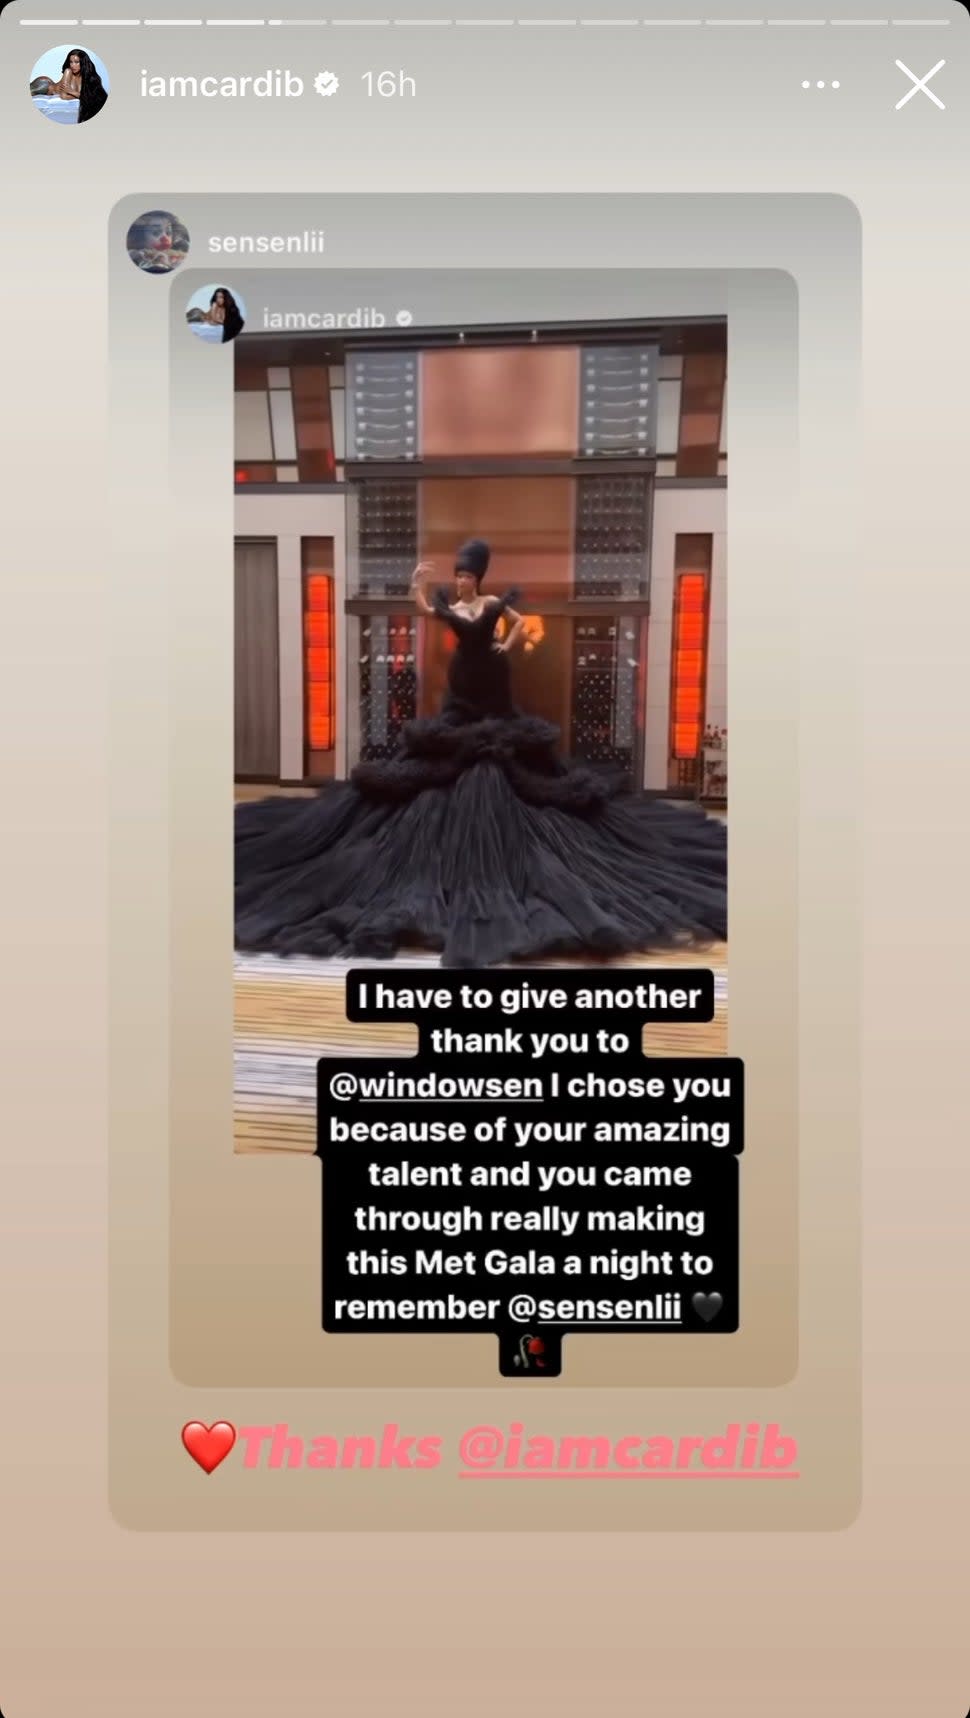 Sensen Lii responds to Cardi B on Instagram after Met Gala